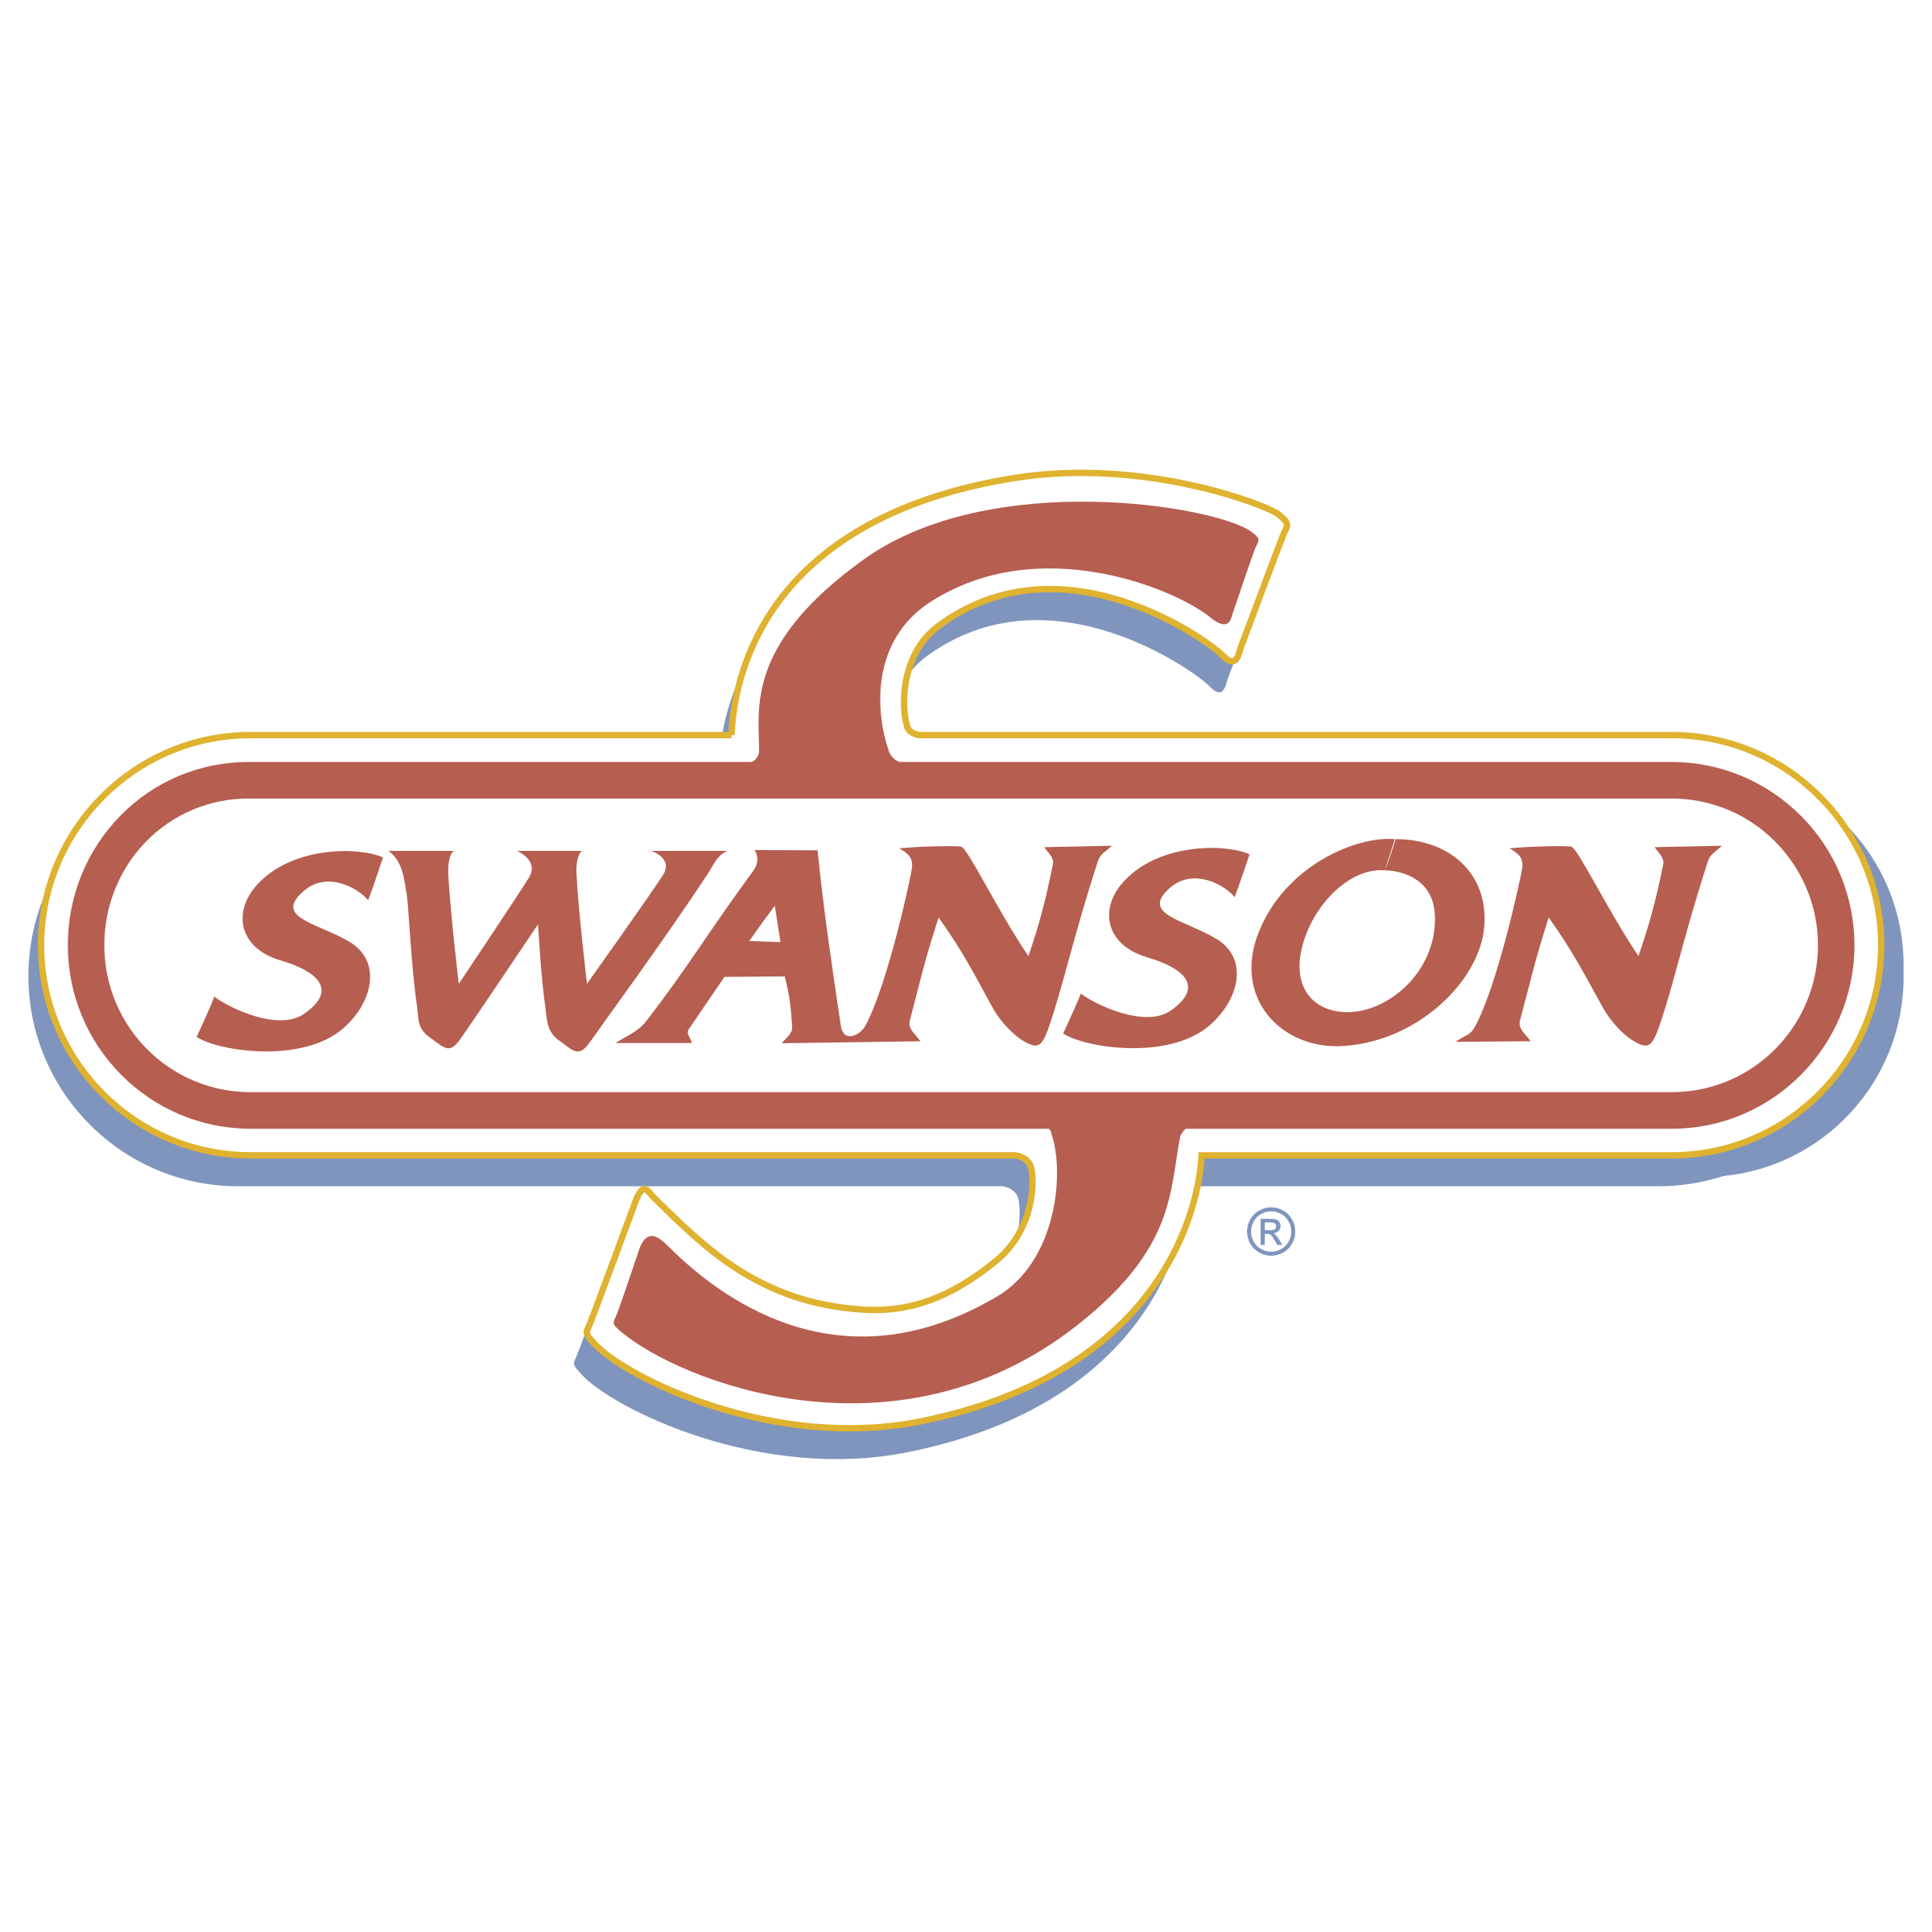 Swanson Logo - Swanson Logo PNG Transparent & SVG Vector